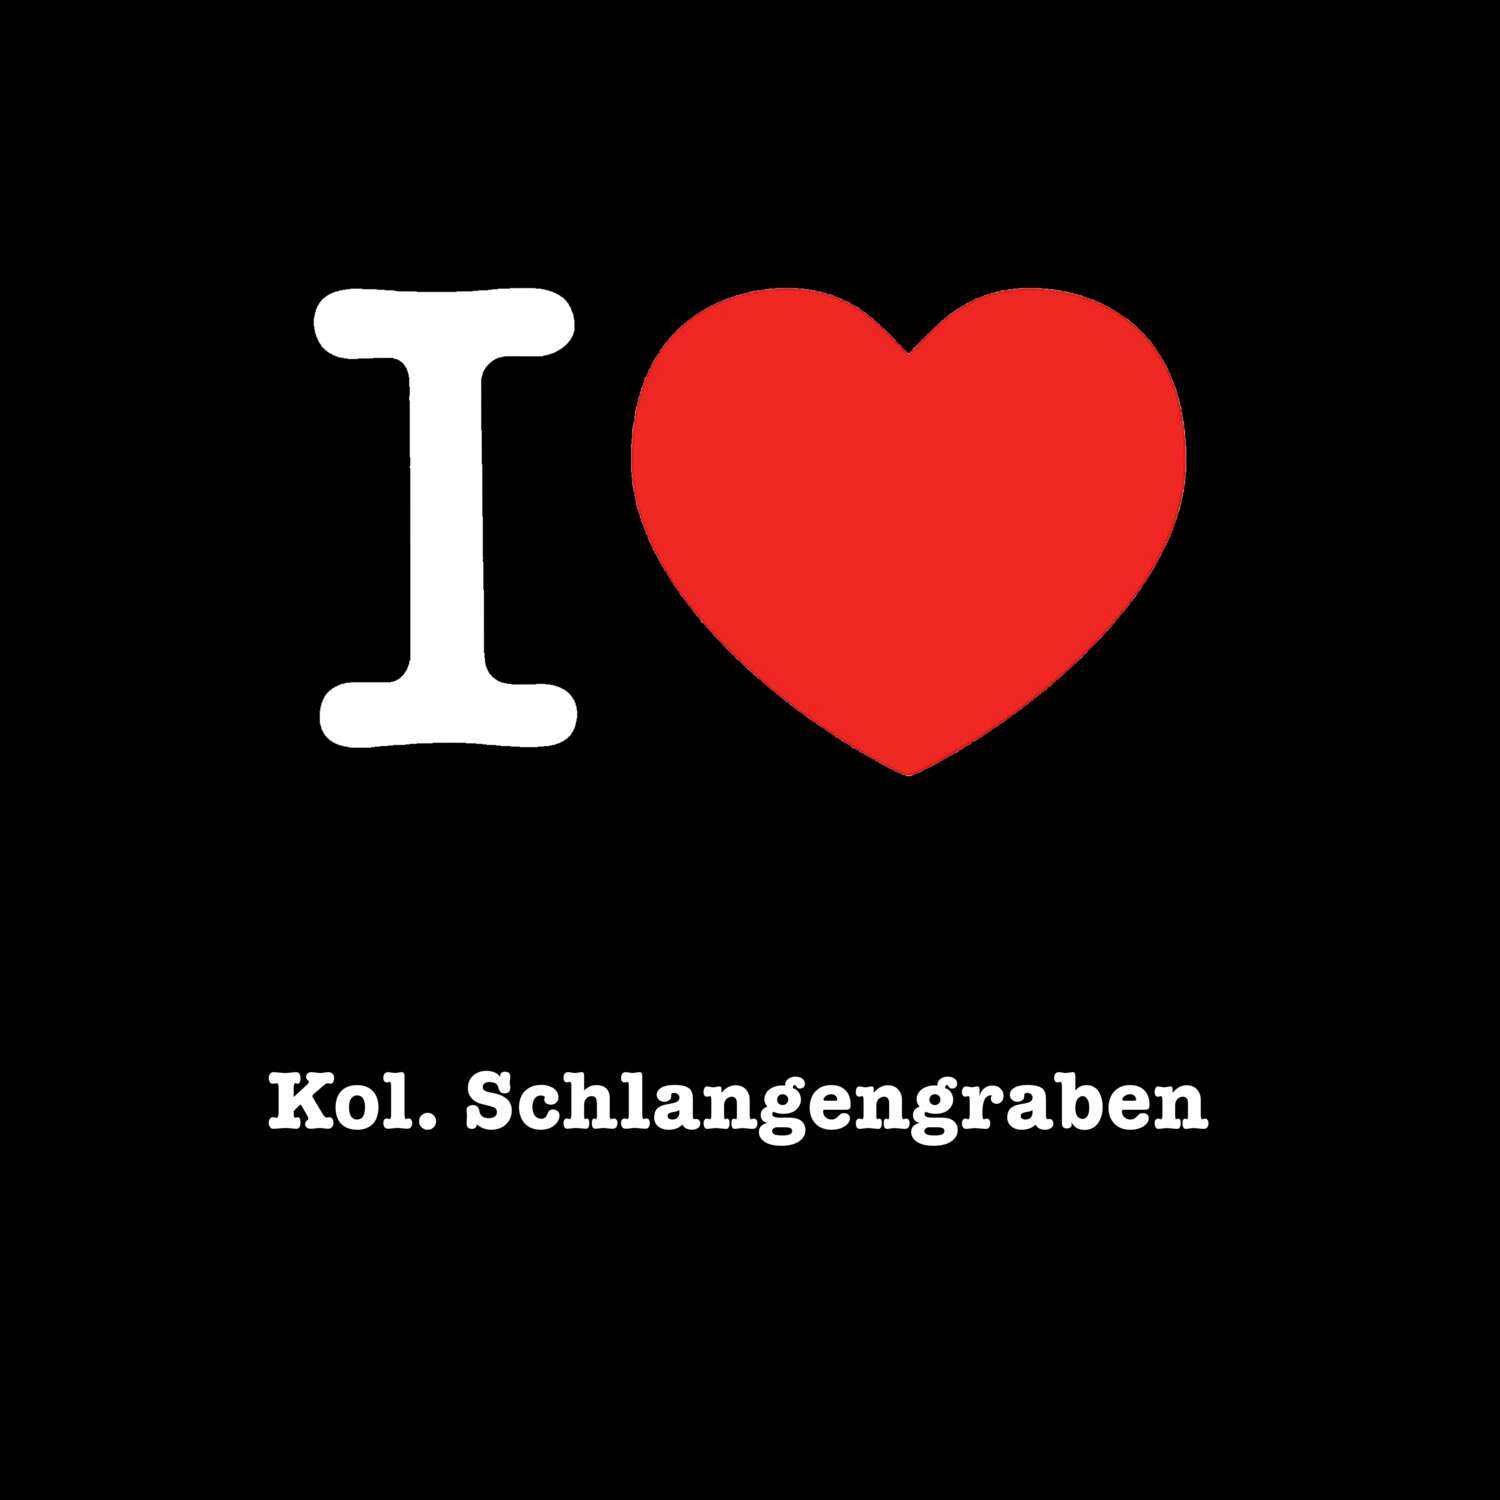 Kol. Schlangengraben T-Shirt »I love«